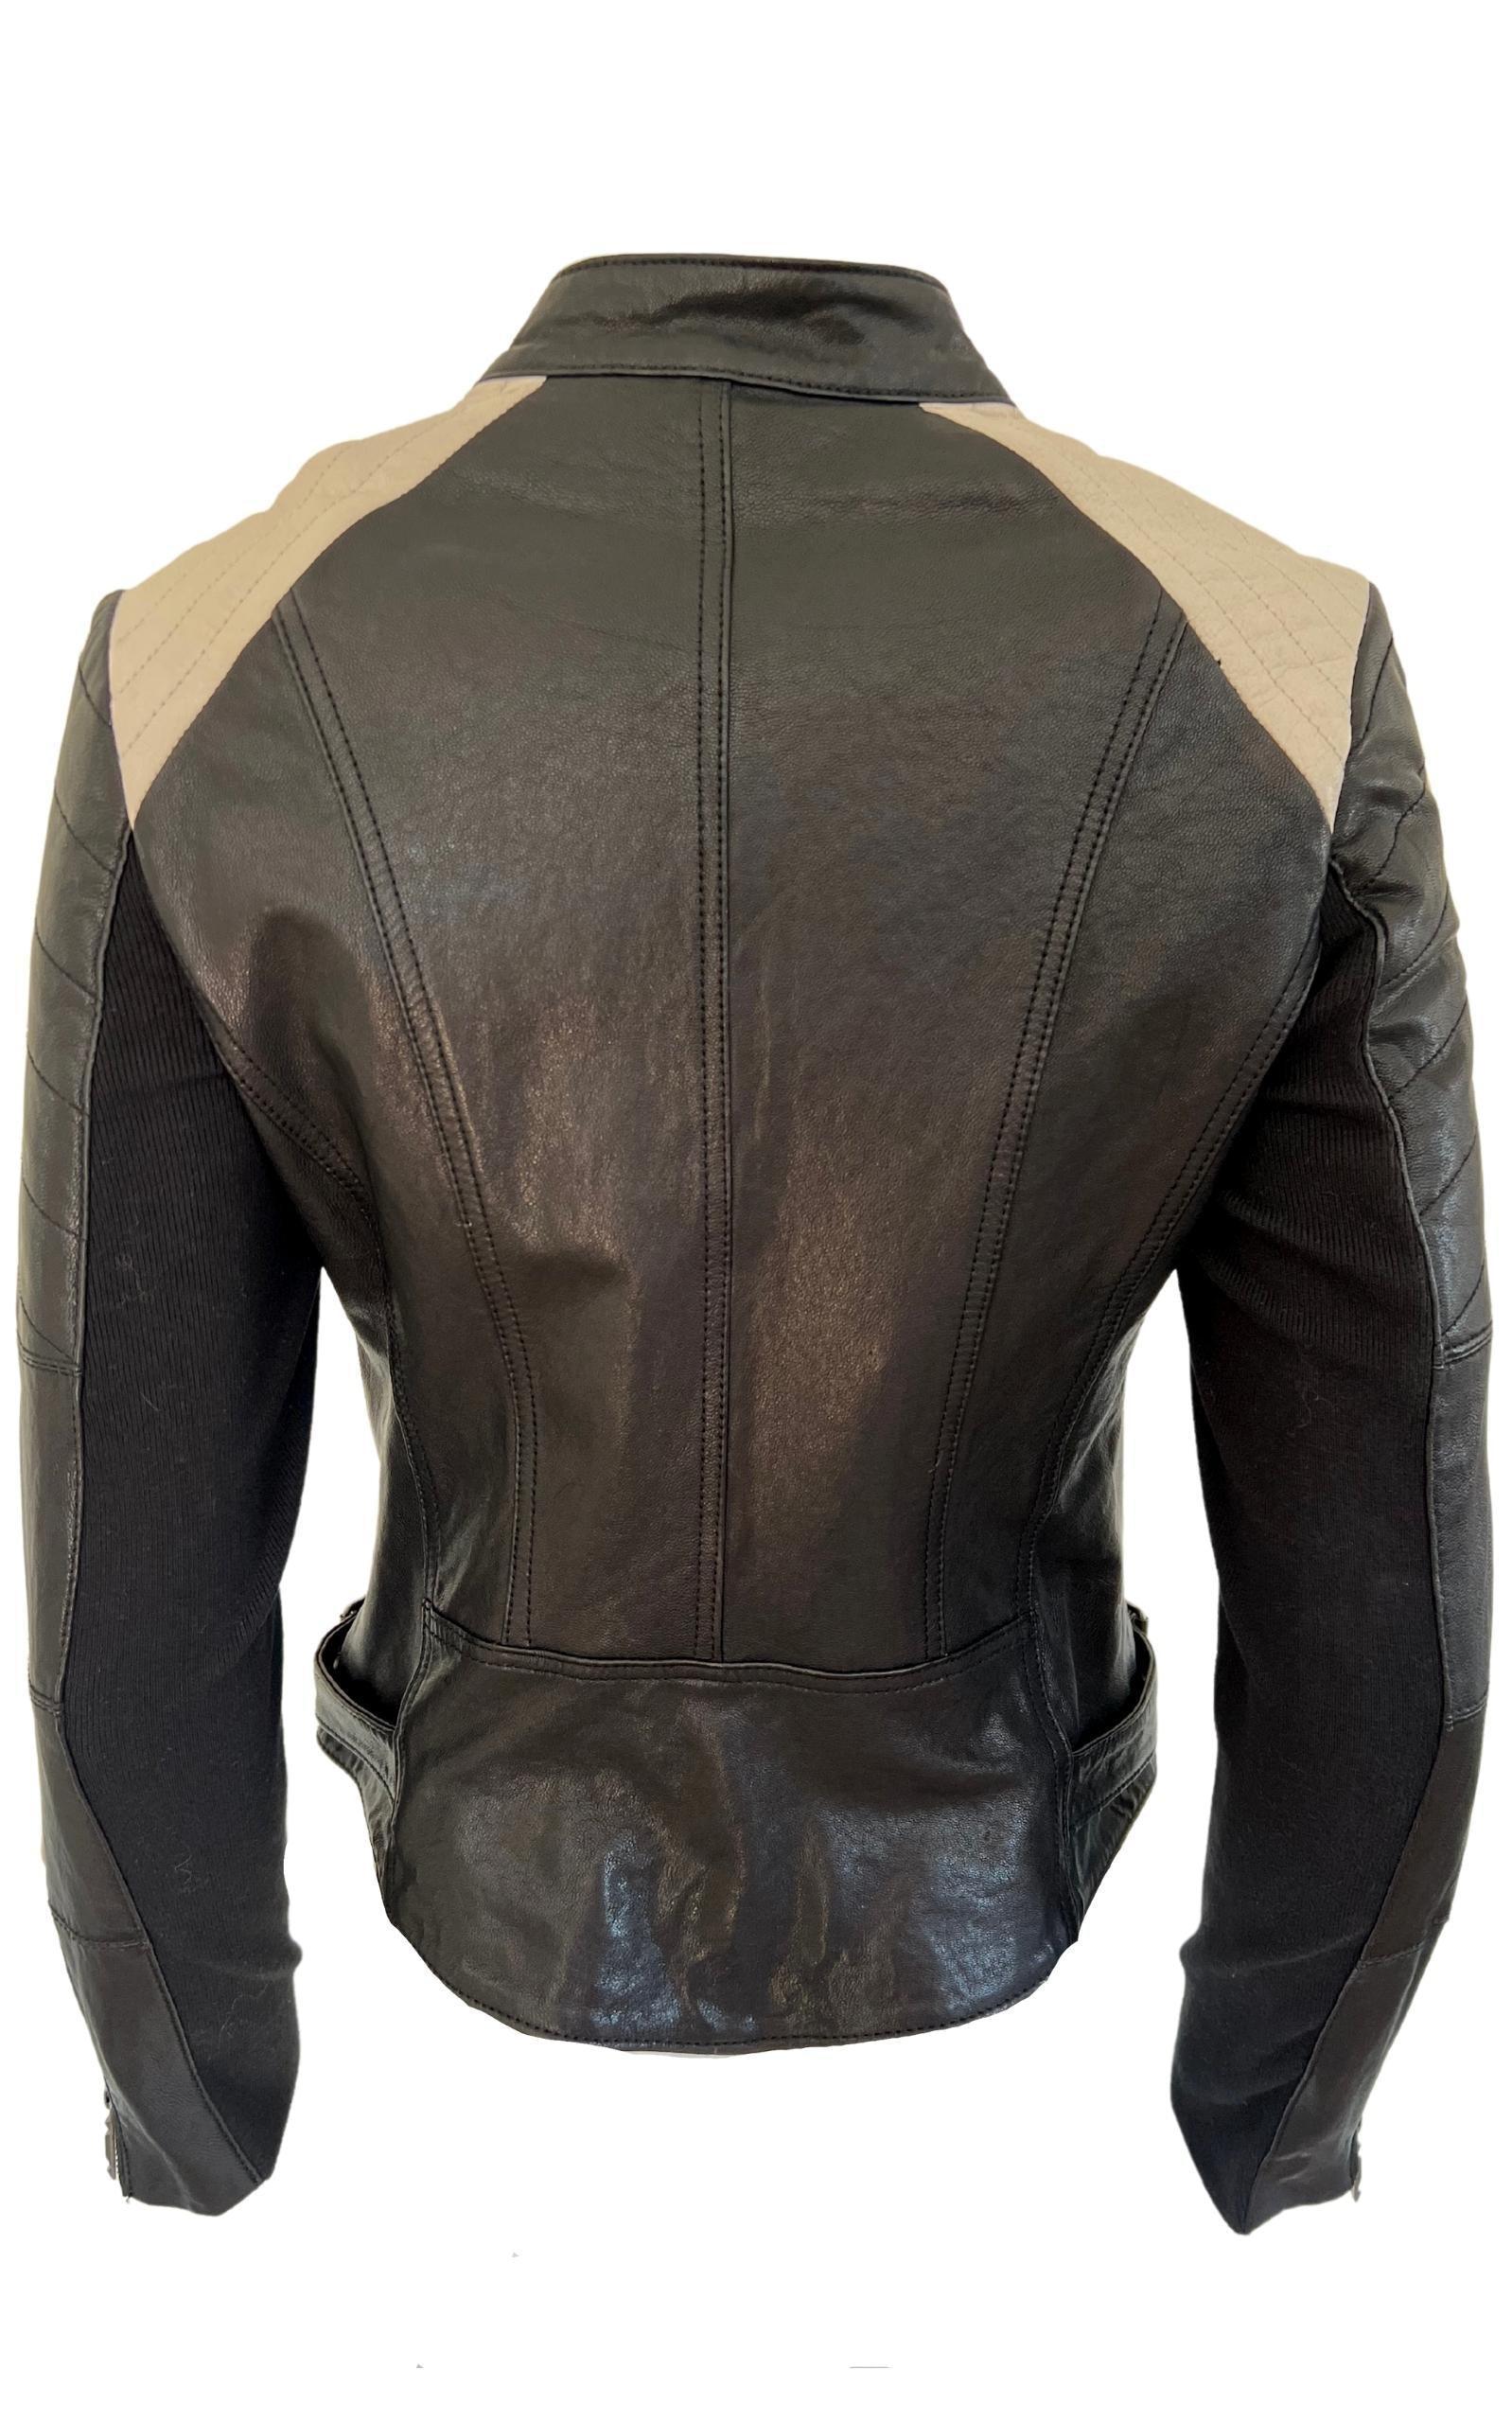  BCBGMAXAZRIAMoto Leather Jacket - Runway Catalog